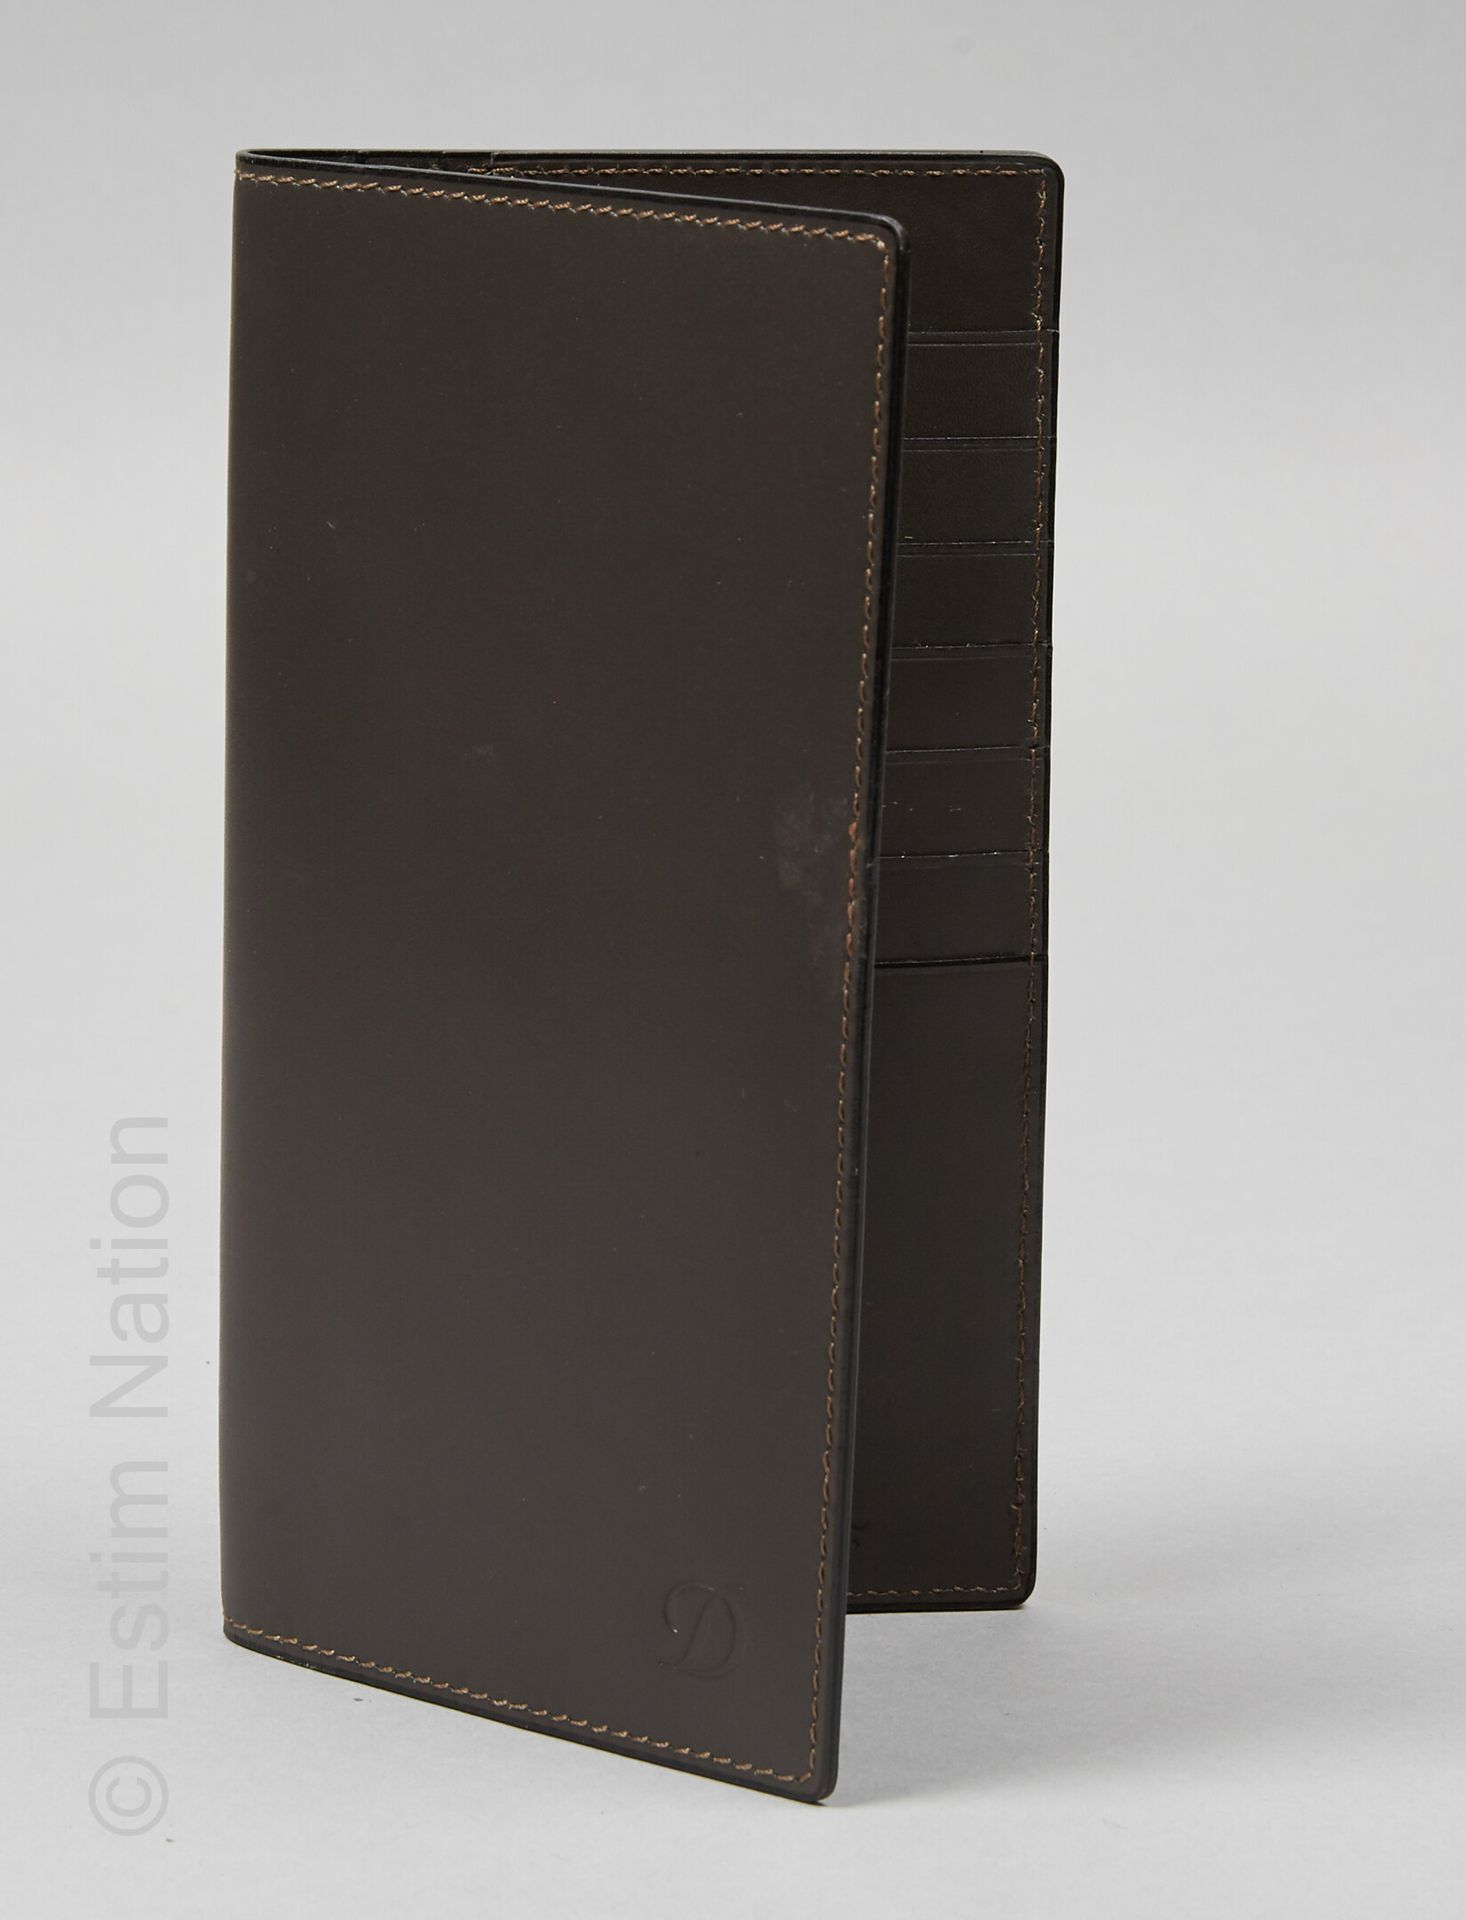 ST DUPONT 灰色皮夹子（18 x 10厘米闭合）（划痕，轻微污损）。